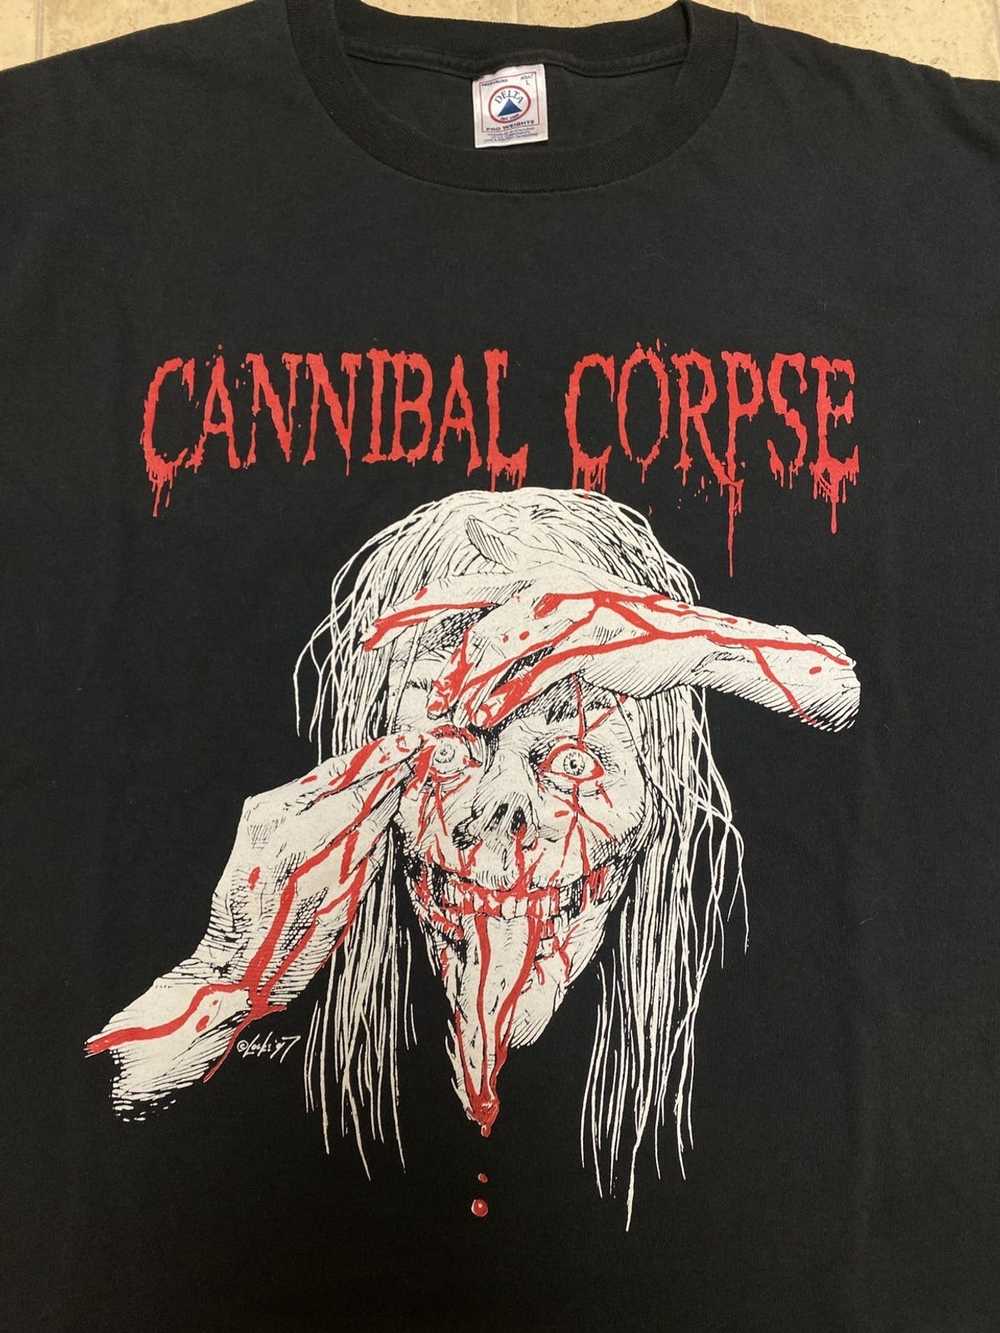 Vintage 1997 cannibal corpse tee - image 1